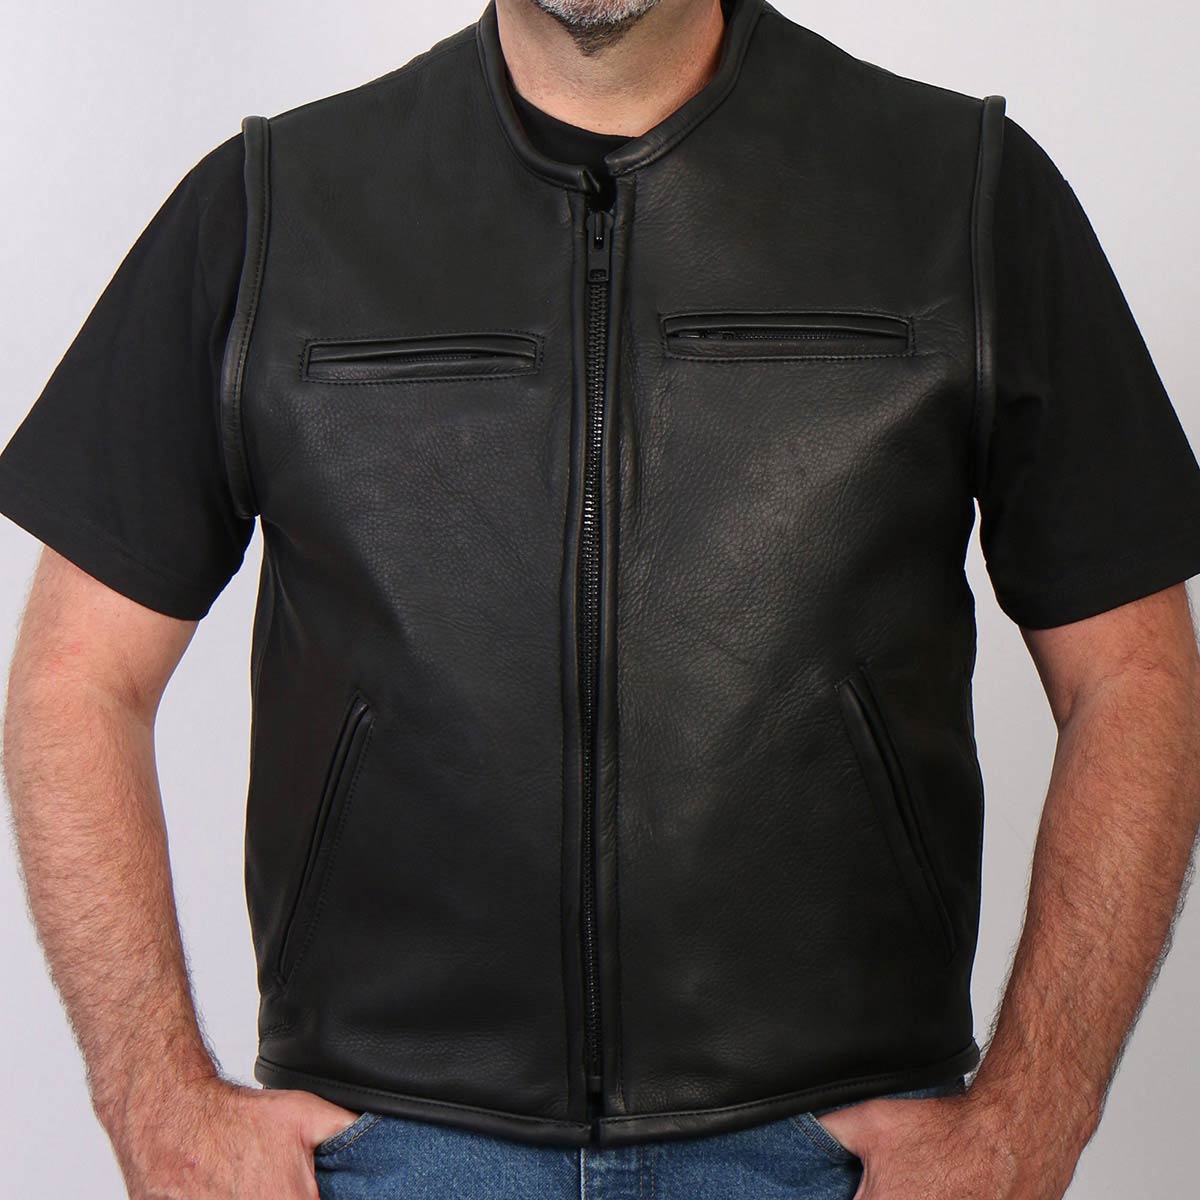 Hot Leathers VSM5001 USA Made Men's Black Premium Steerhide Leather Club Style Vest